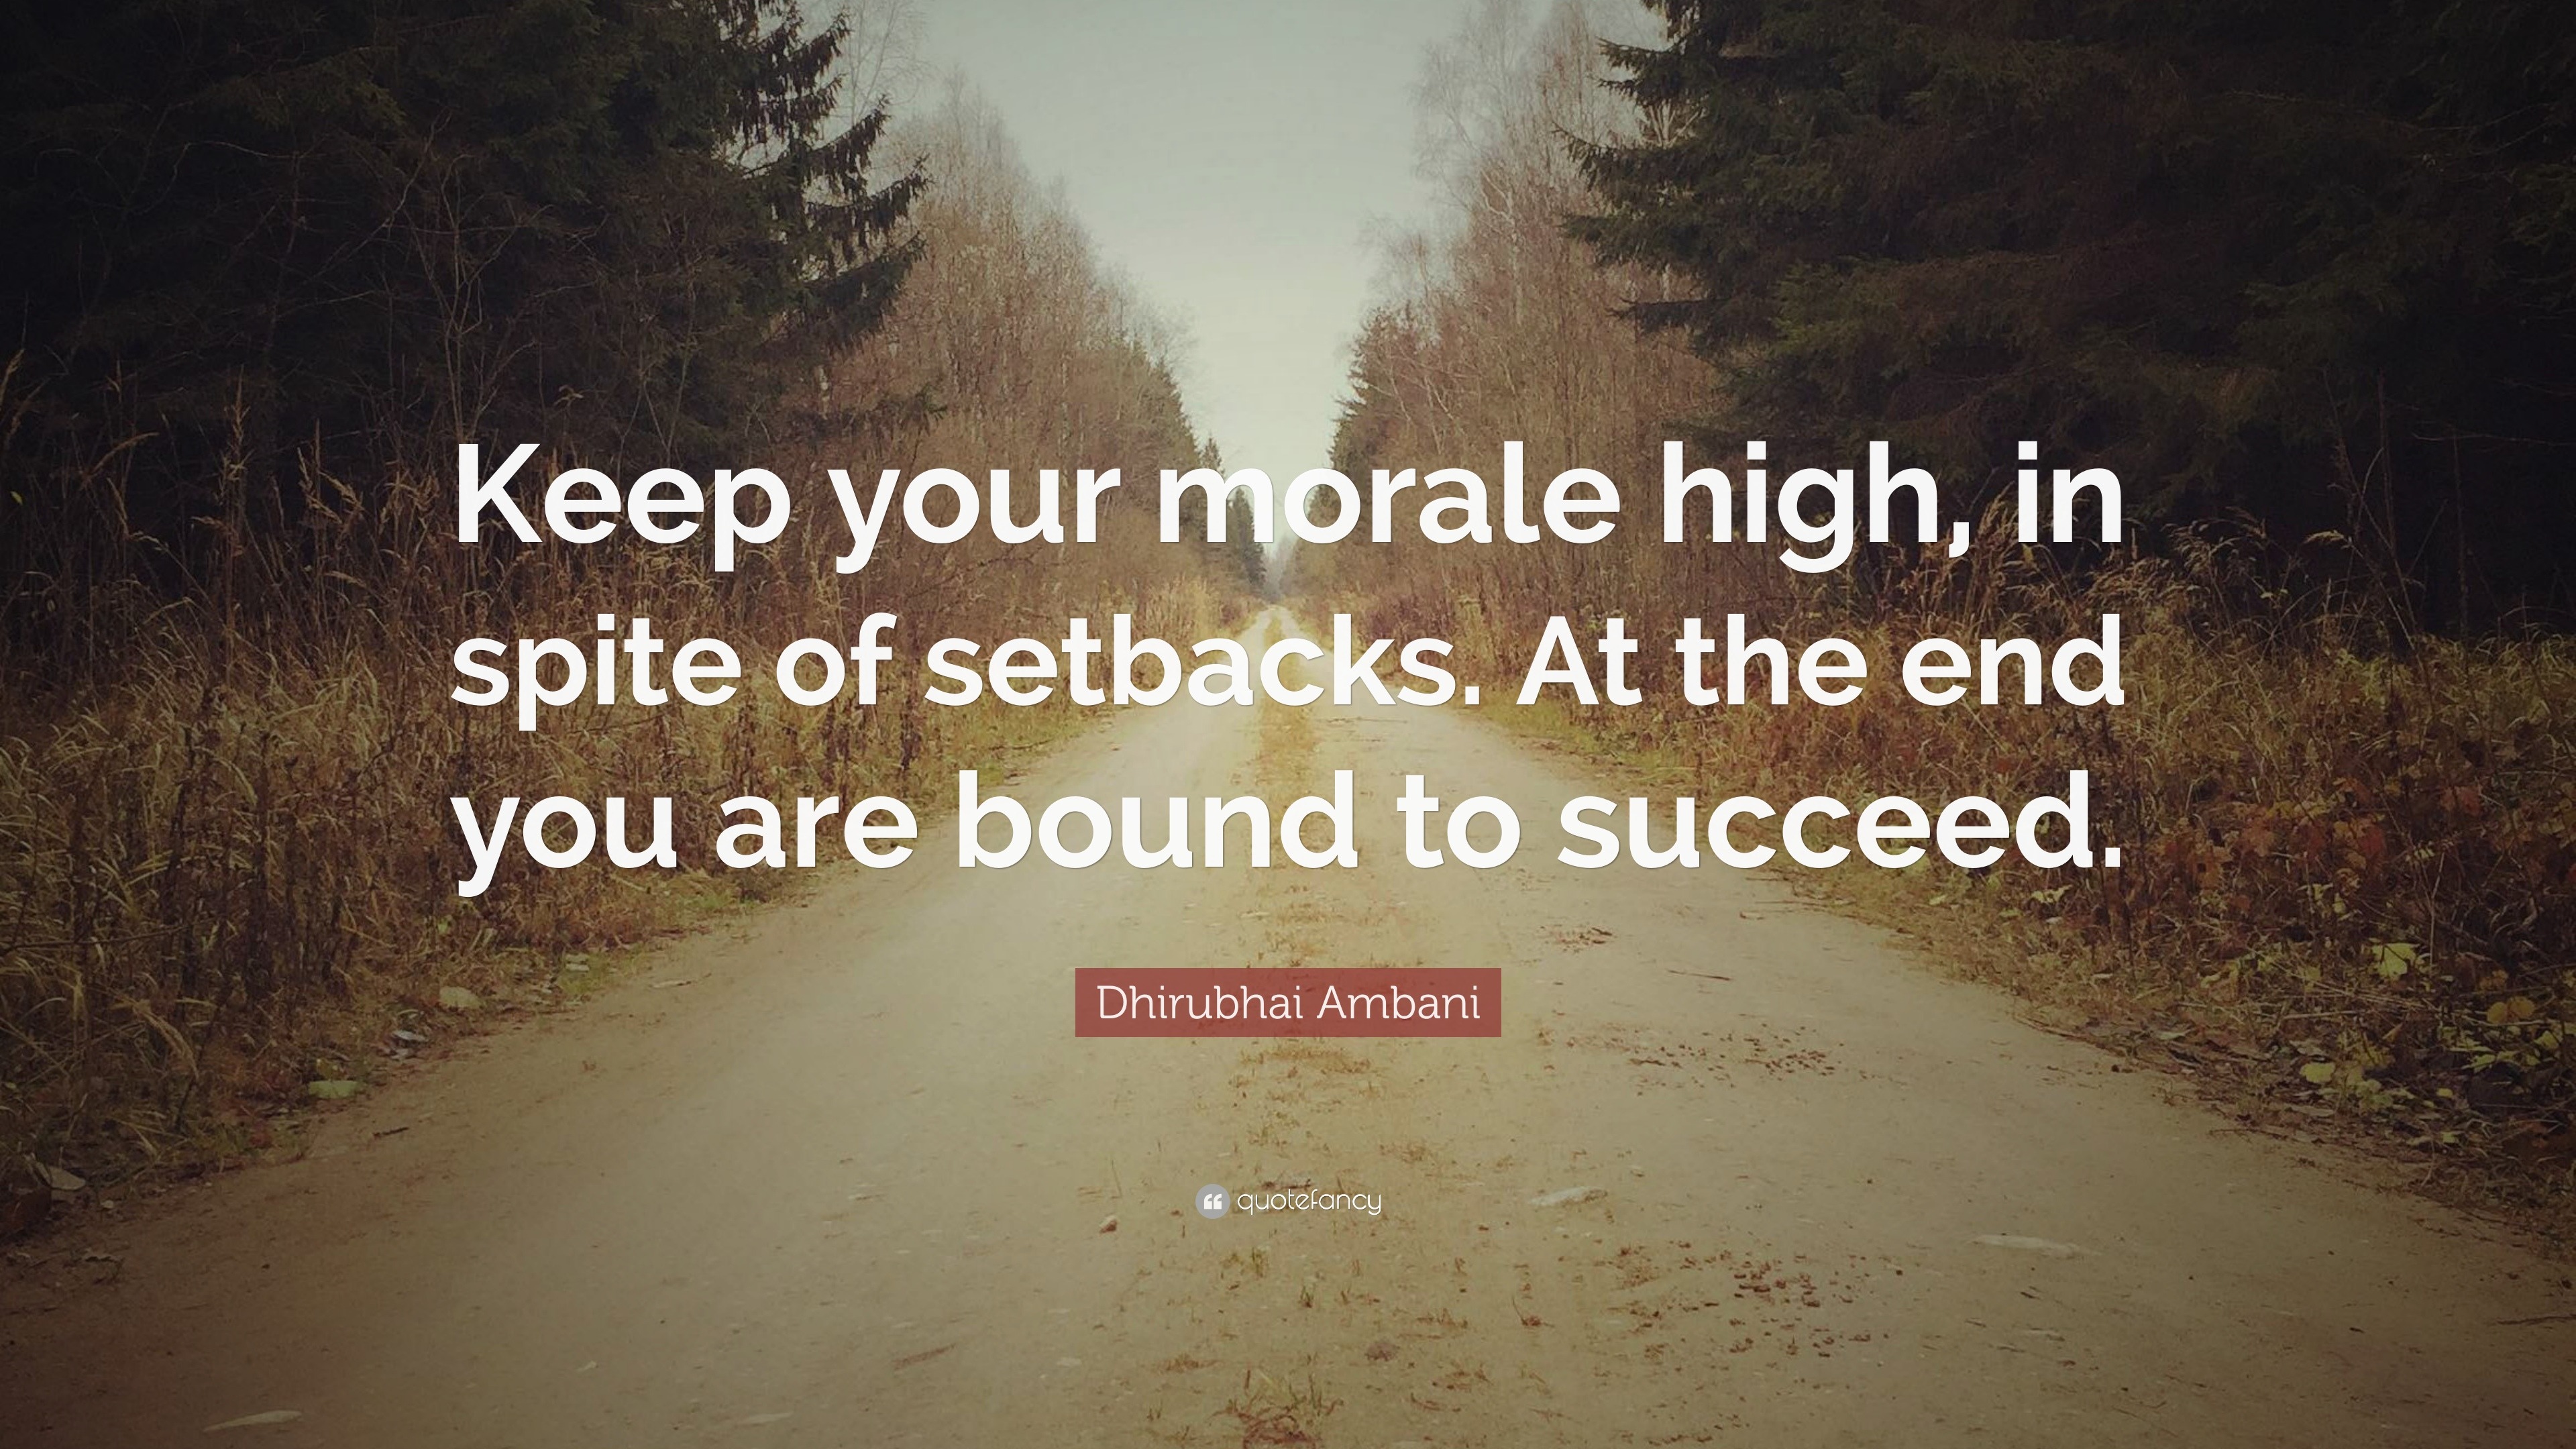 Dhirubhai Ambani Quote: “Keep your morale high, in spite of setbacks